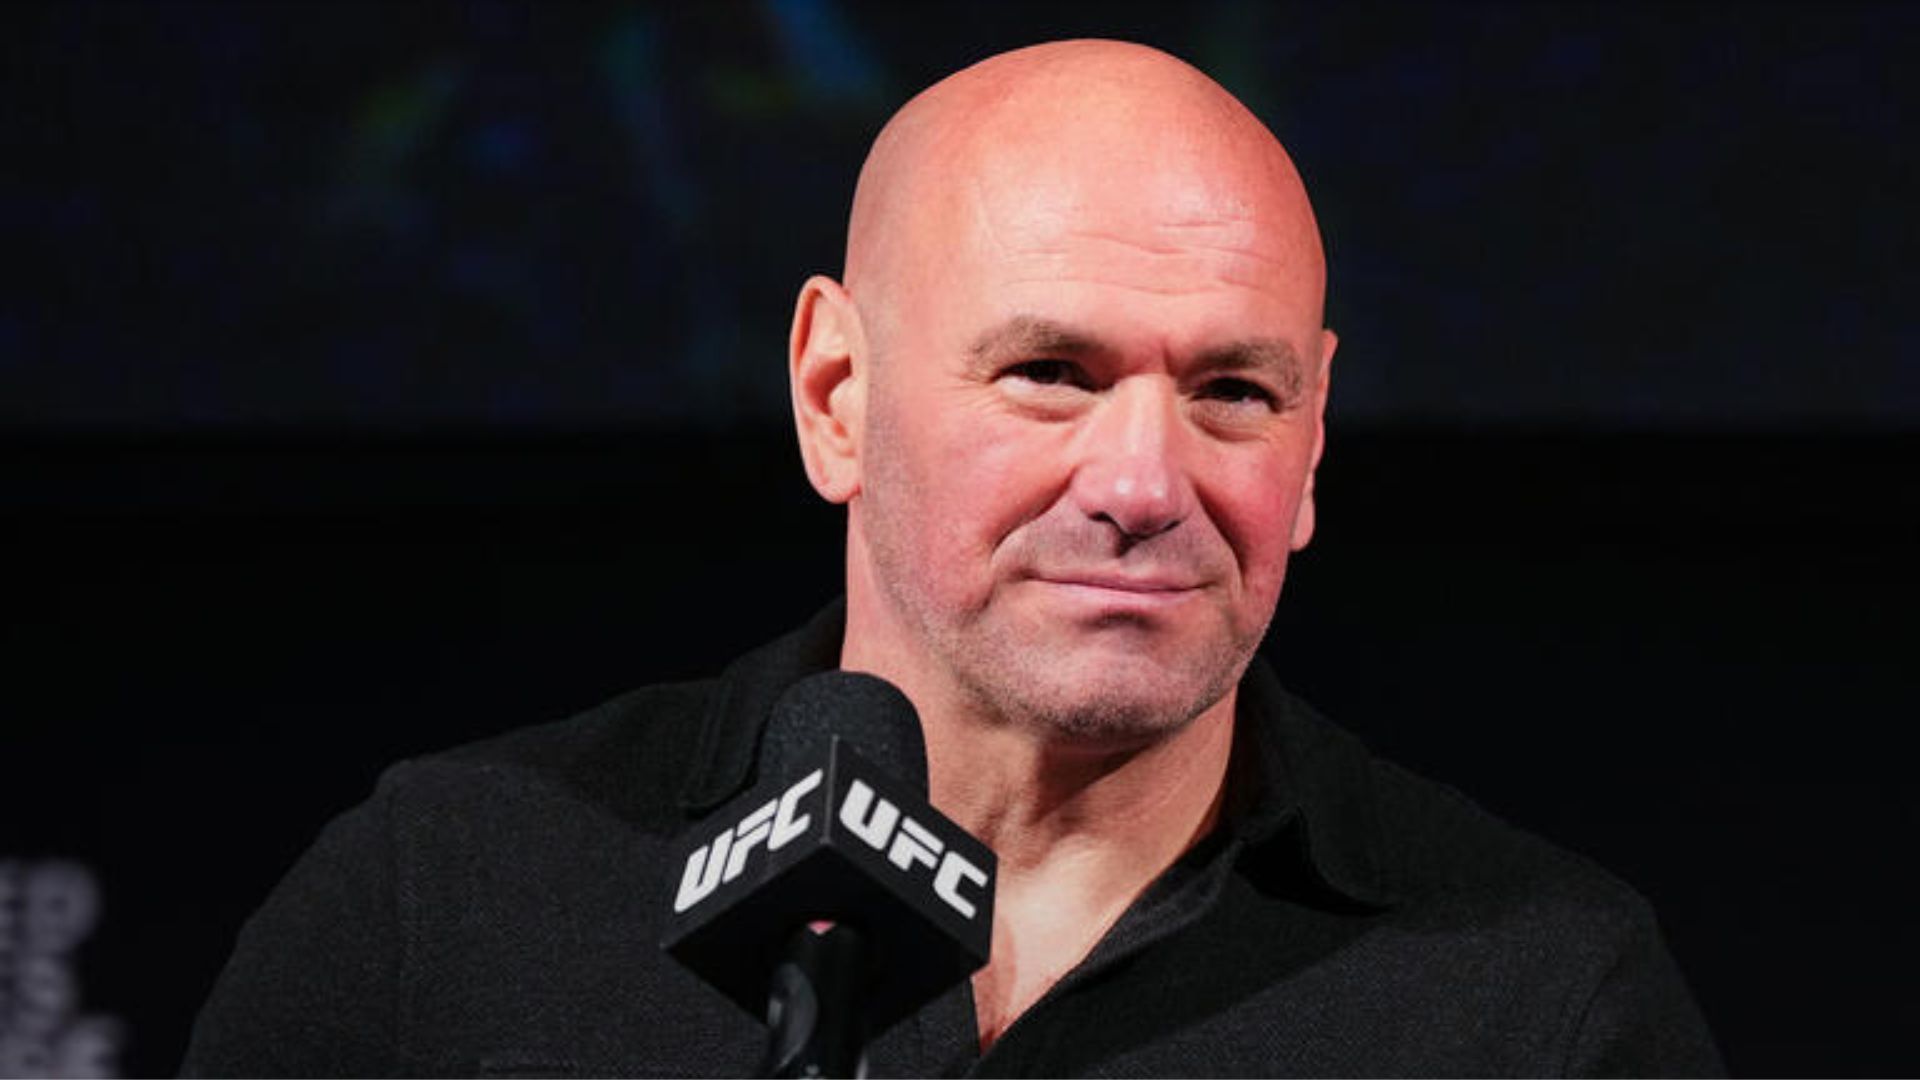 UFC President Dana White made an interesting comment involving WWE